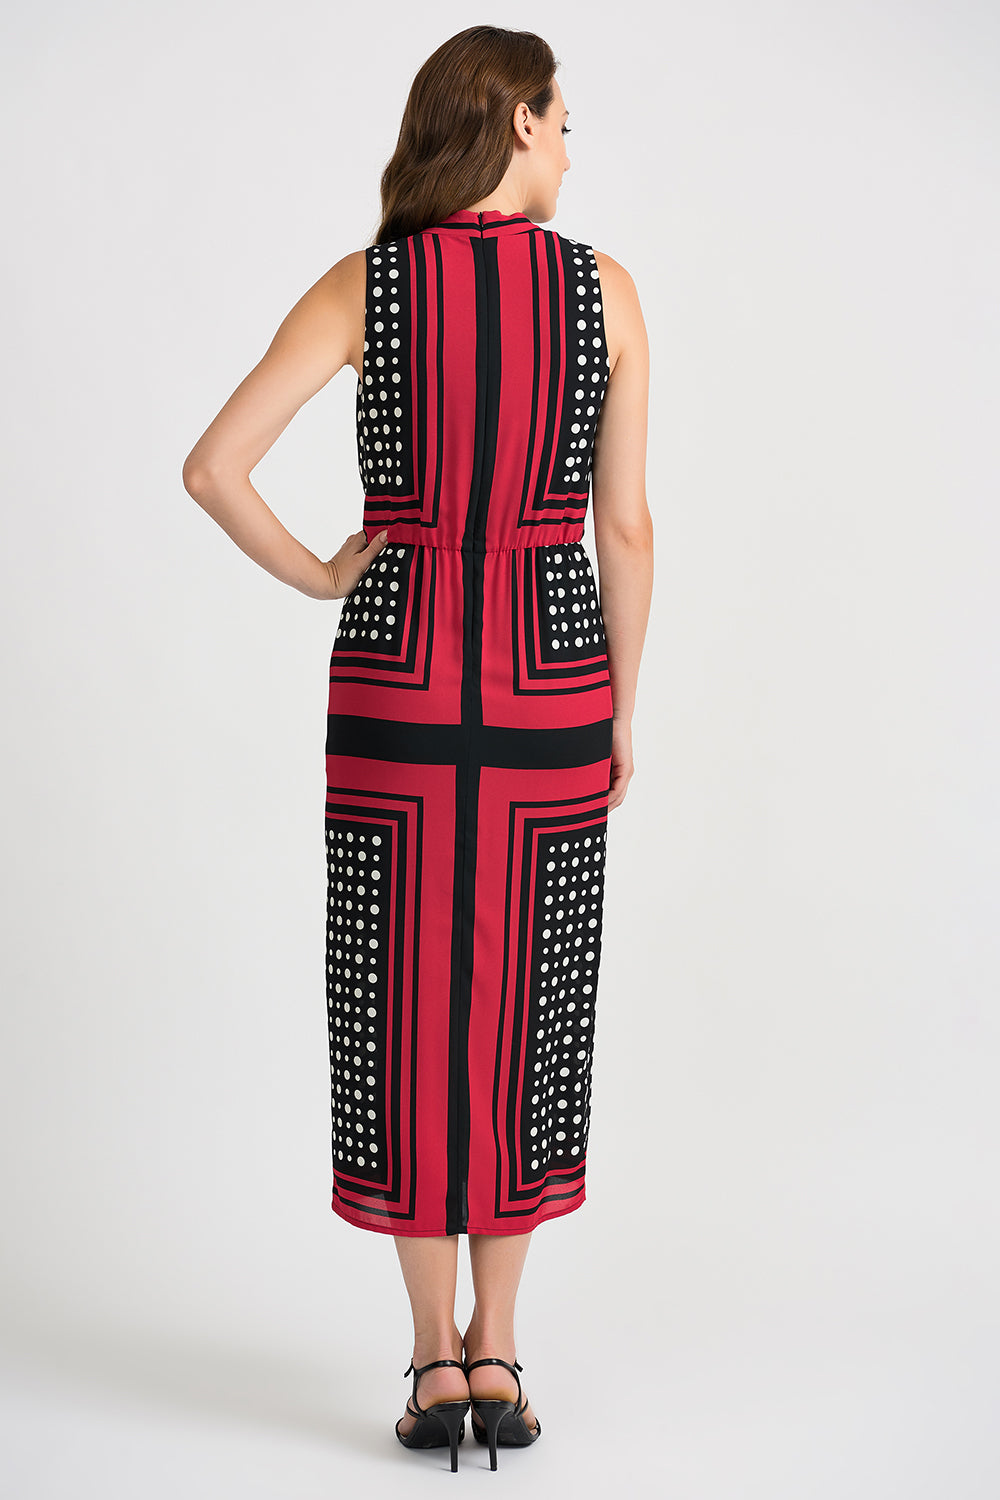 Joseph Ribkoff Black-Vanilla-Lipstick Red Dress Style 201462